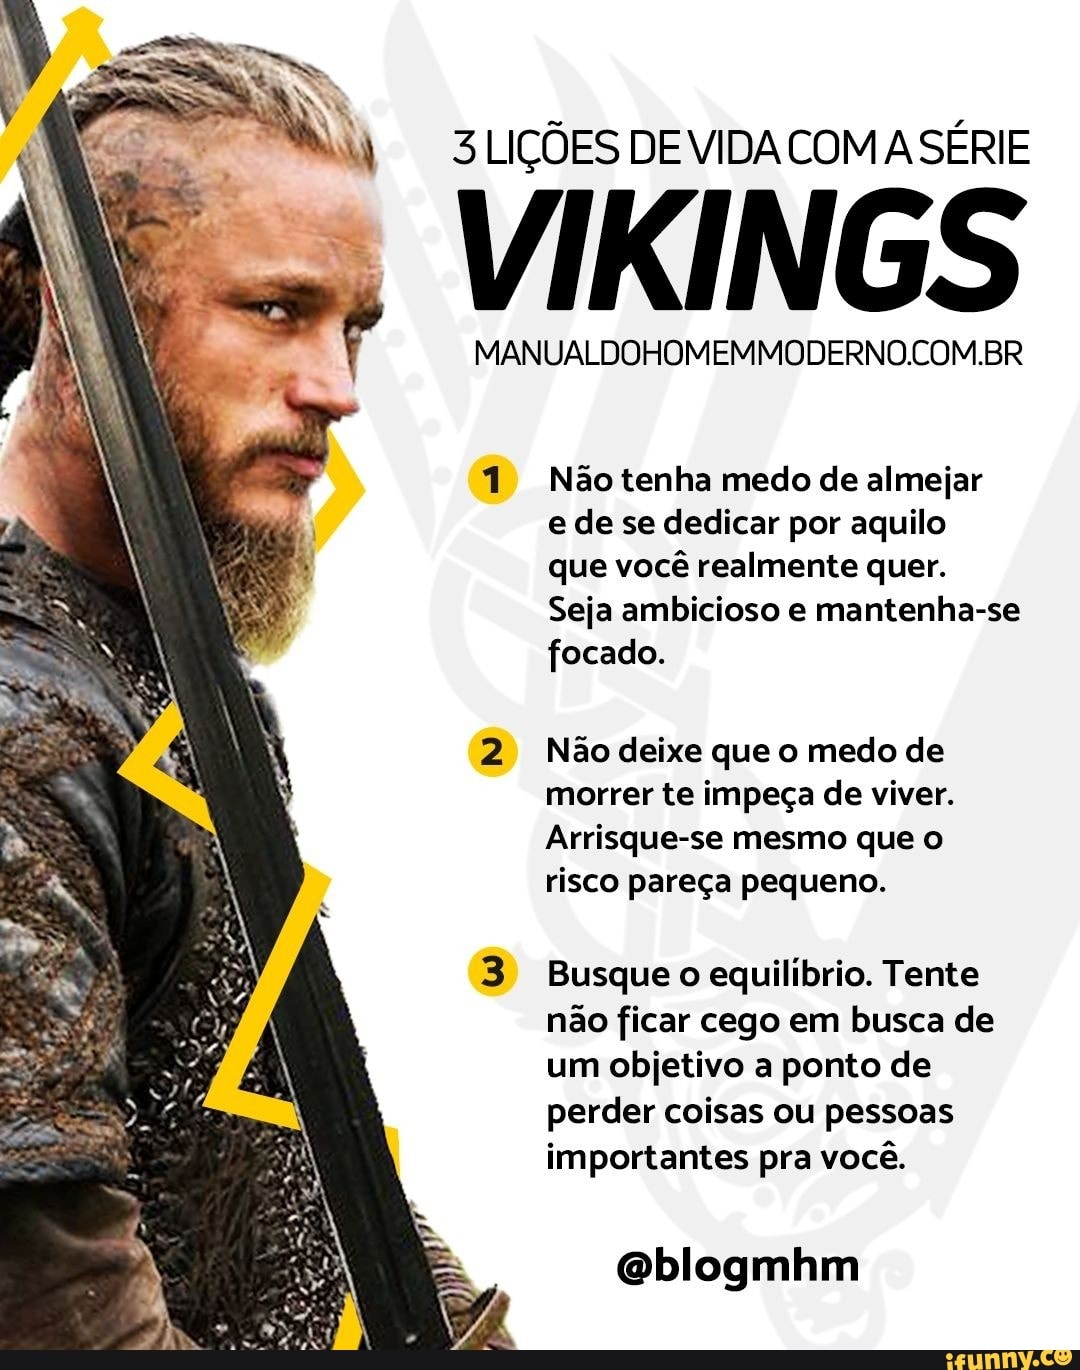 Vikings da Depressão added a new photo. - Vikings da Depressão